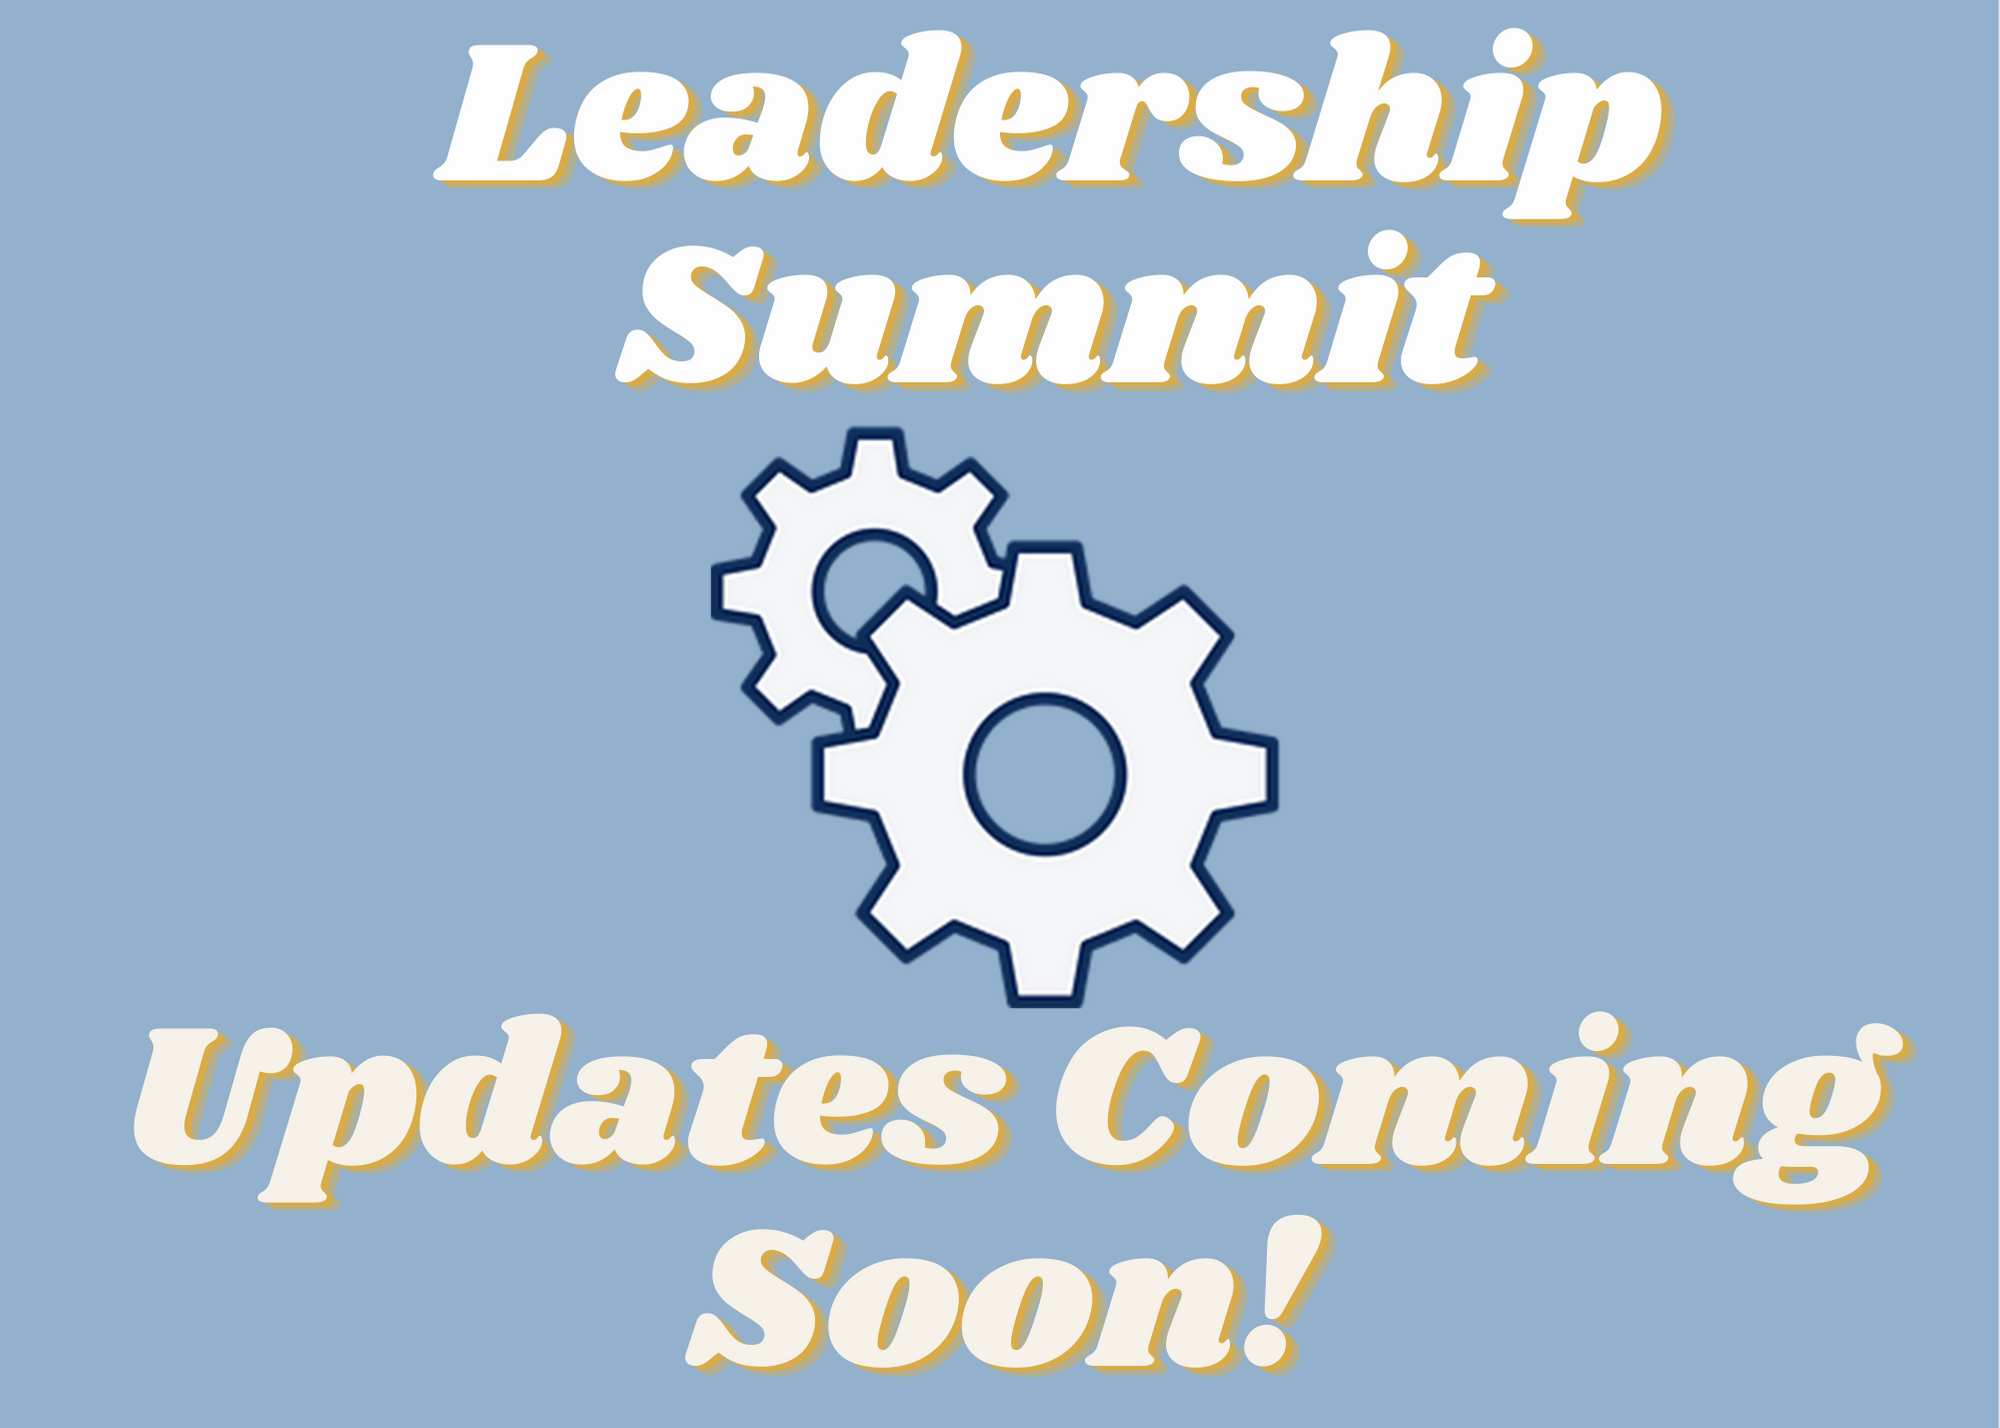 Leadership Summit Updates Coming Soon